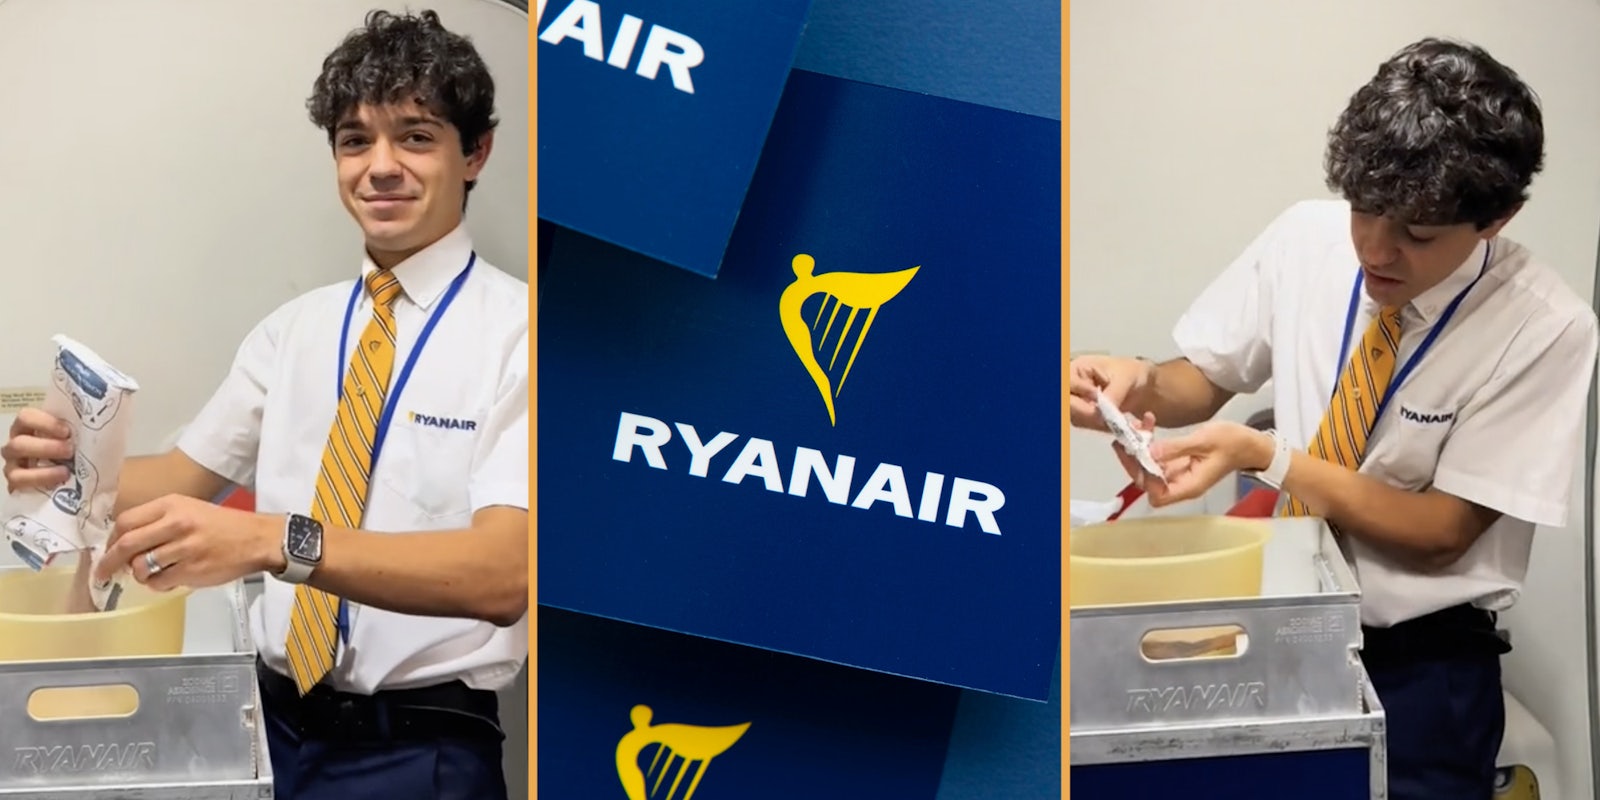 Flight attendant making cake(l+r), Ryan air logo(c)